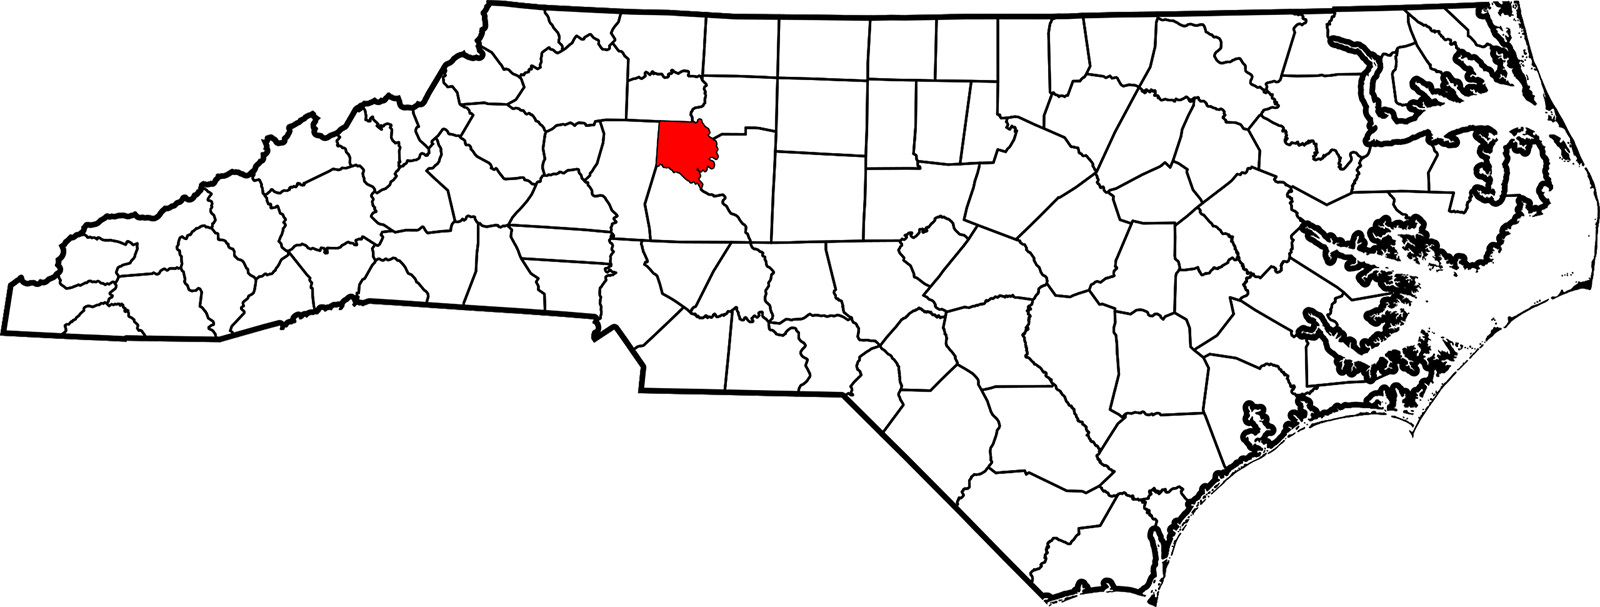 Davie County, red, in North Carolina. (Map courtesy Wikipedia/Creative Commons)